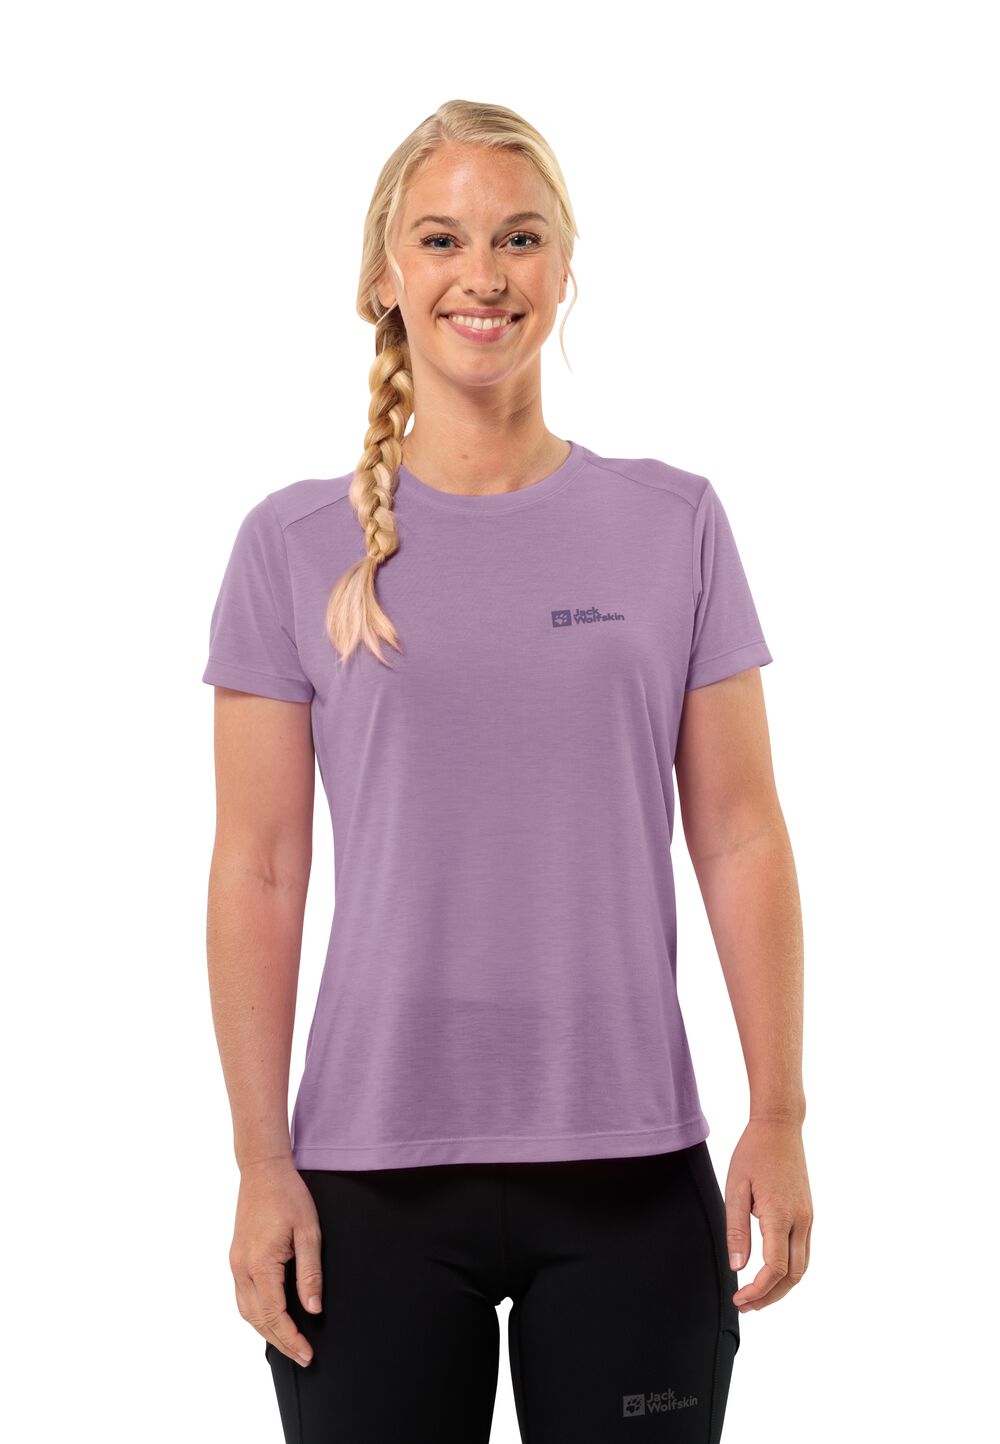 Jack Wolfskin Vonnan S S T-Shirt Women Functioneel shirt Dames XL velvet